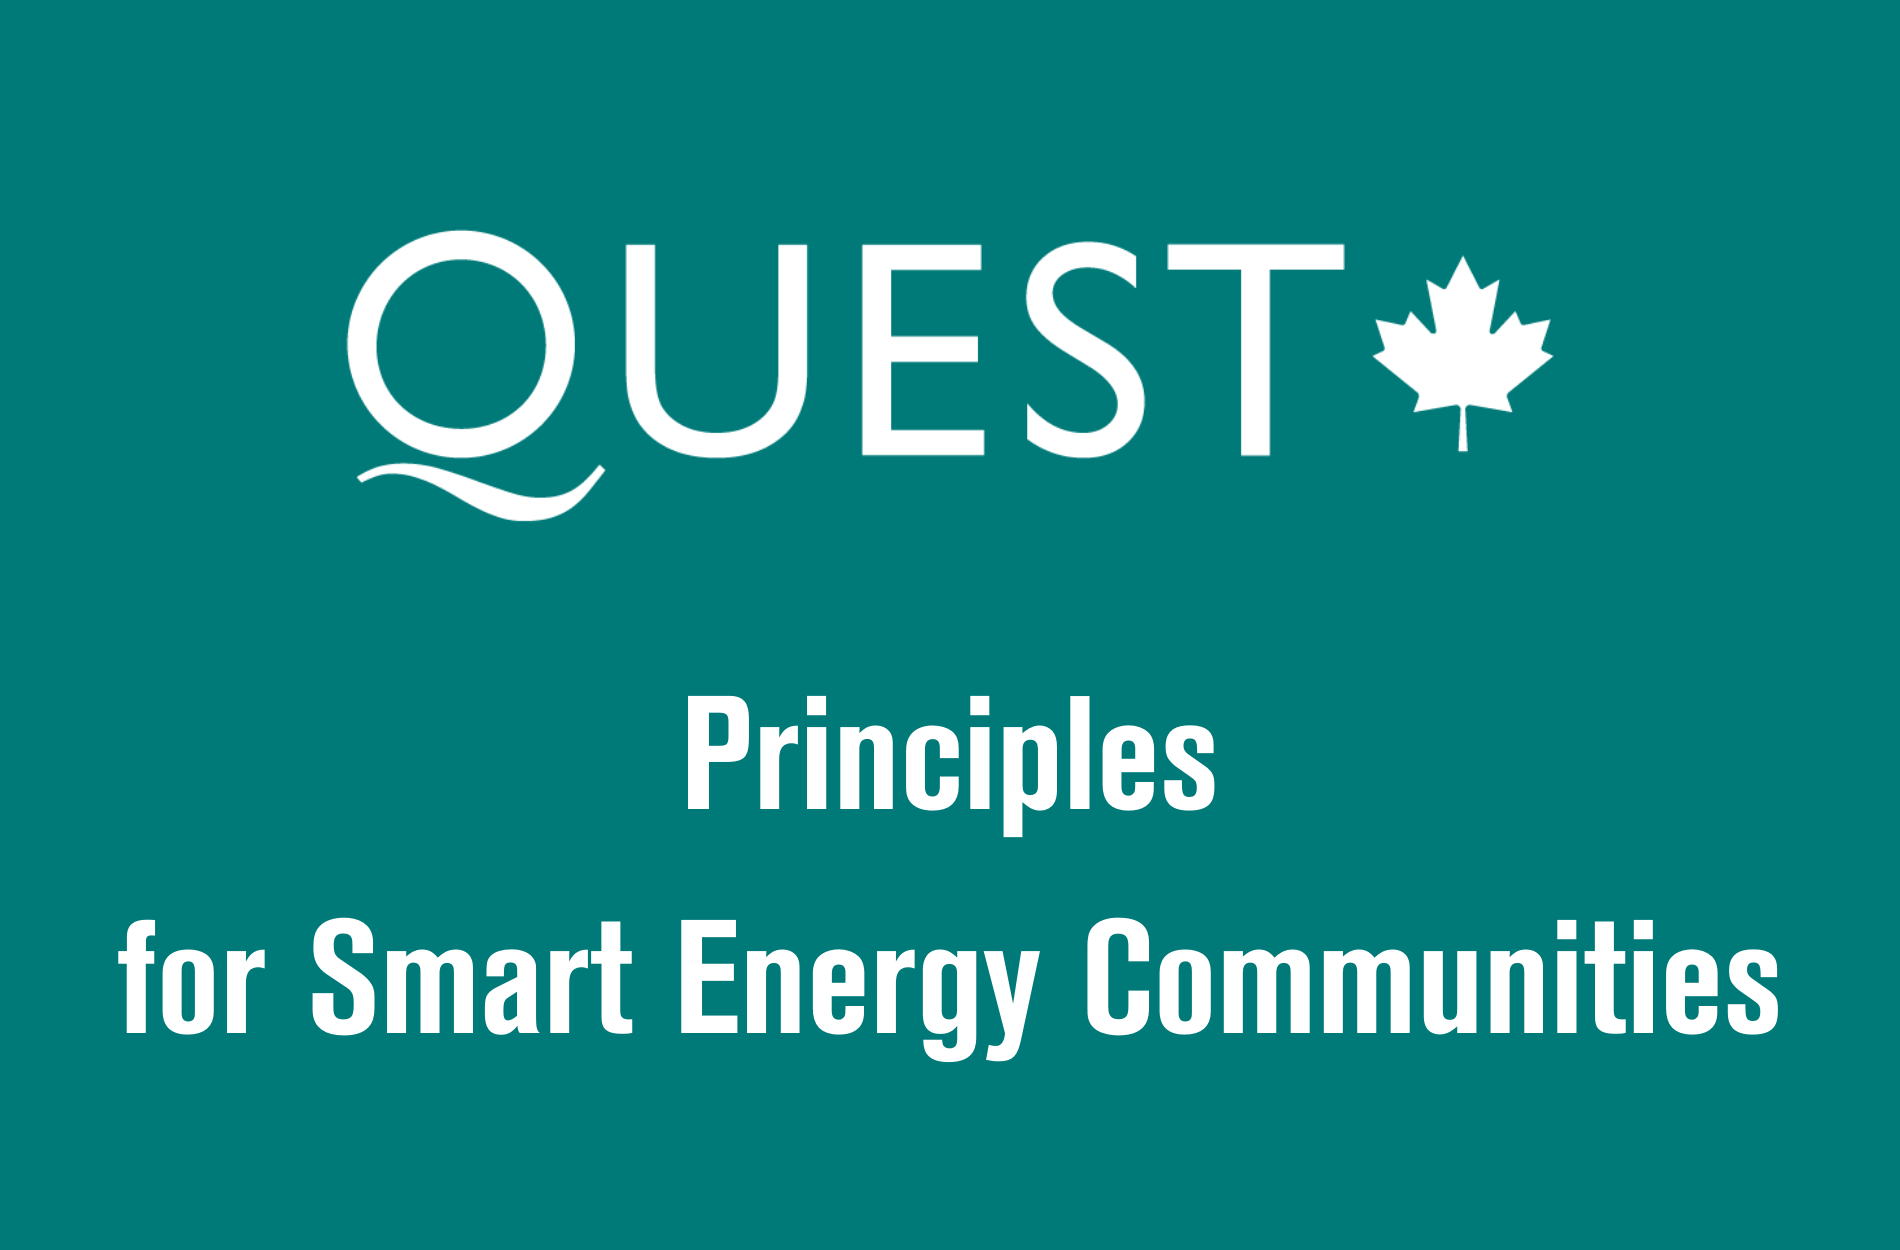 Principles for Smart Energy Communities